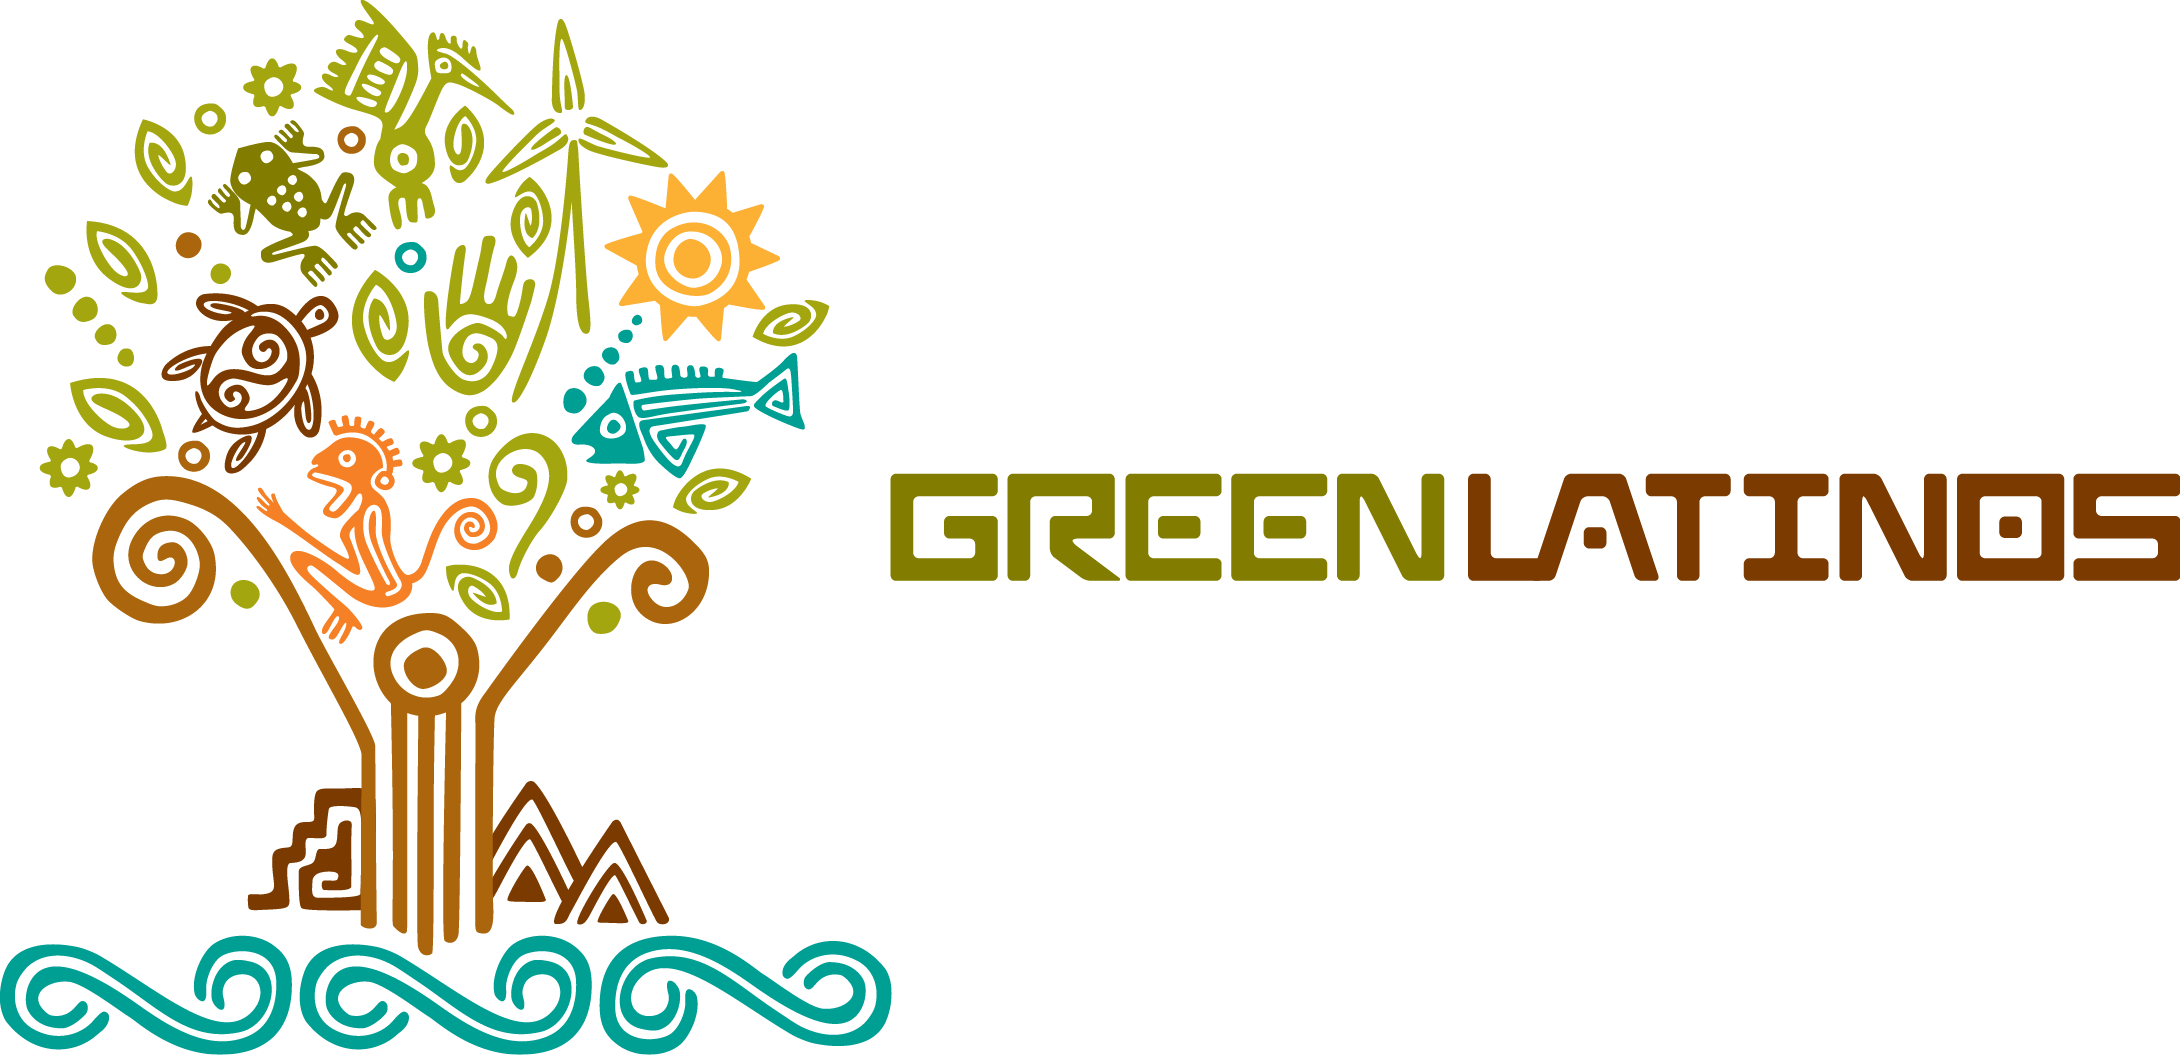 Copy of Green Latinos_logo - Juan Madrid.png